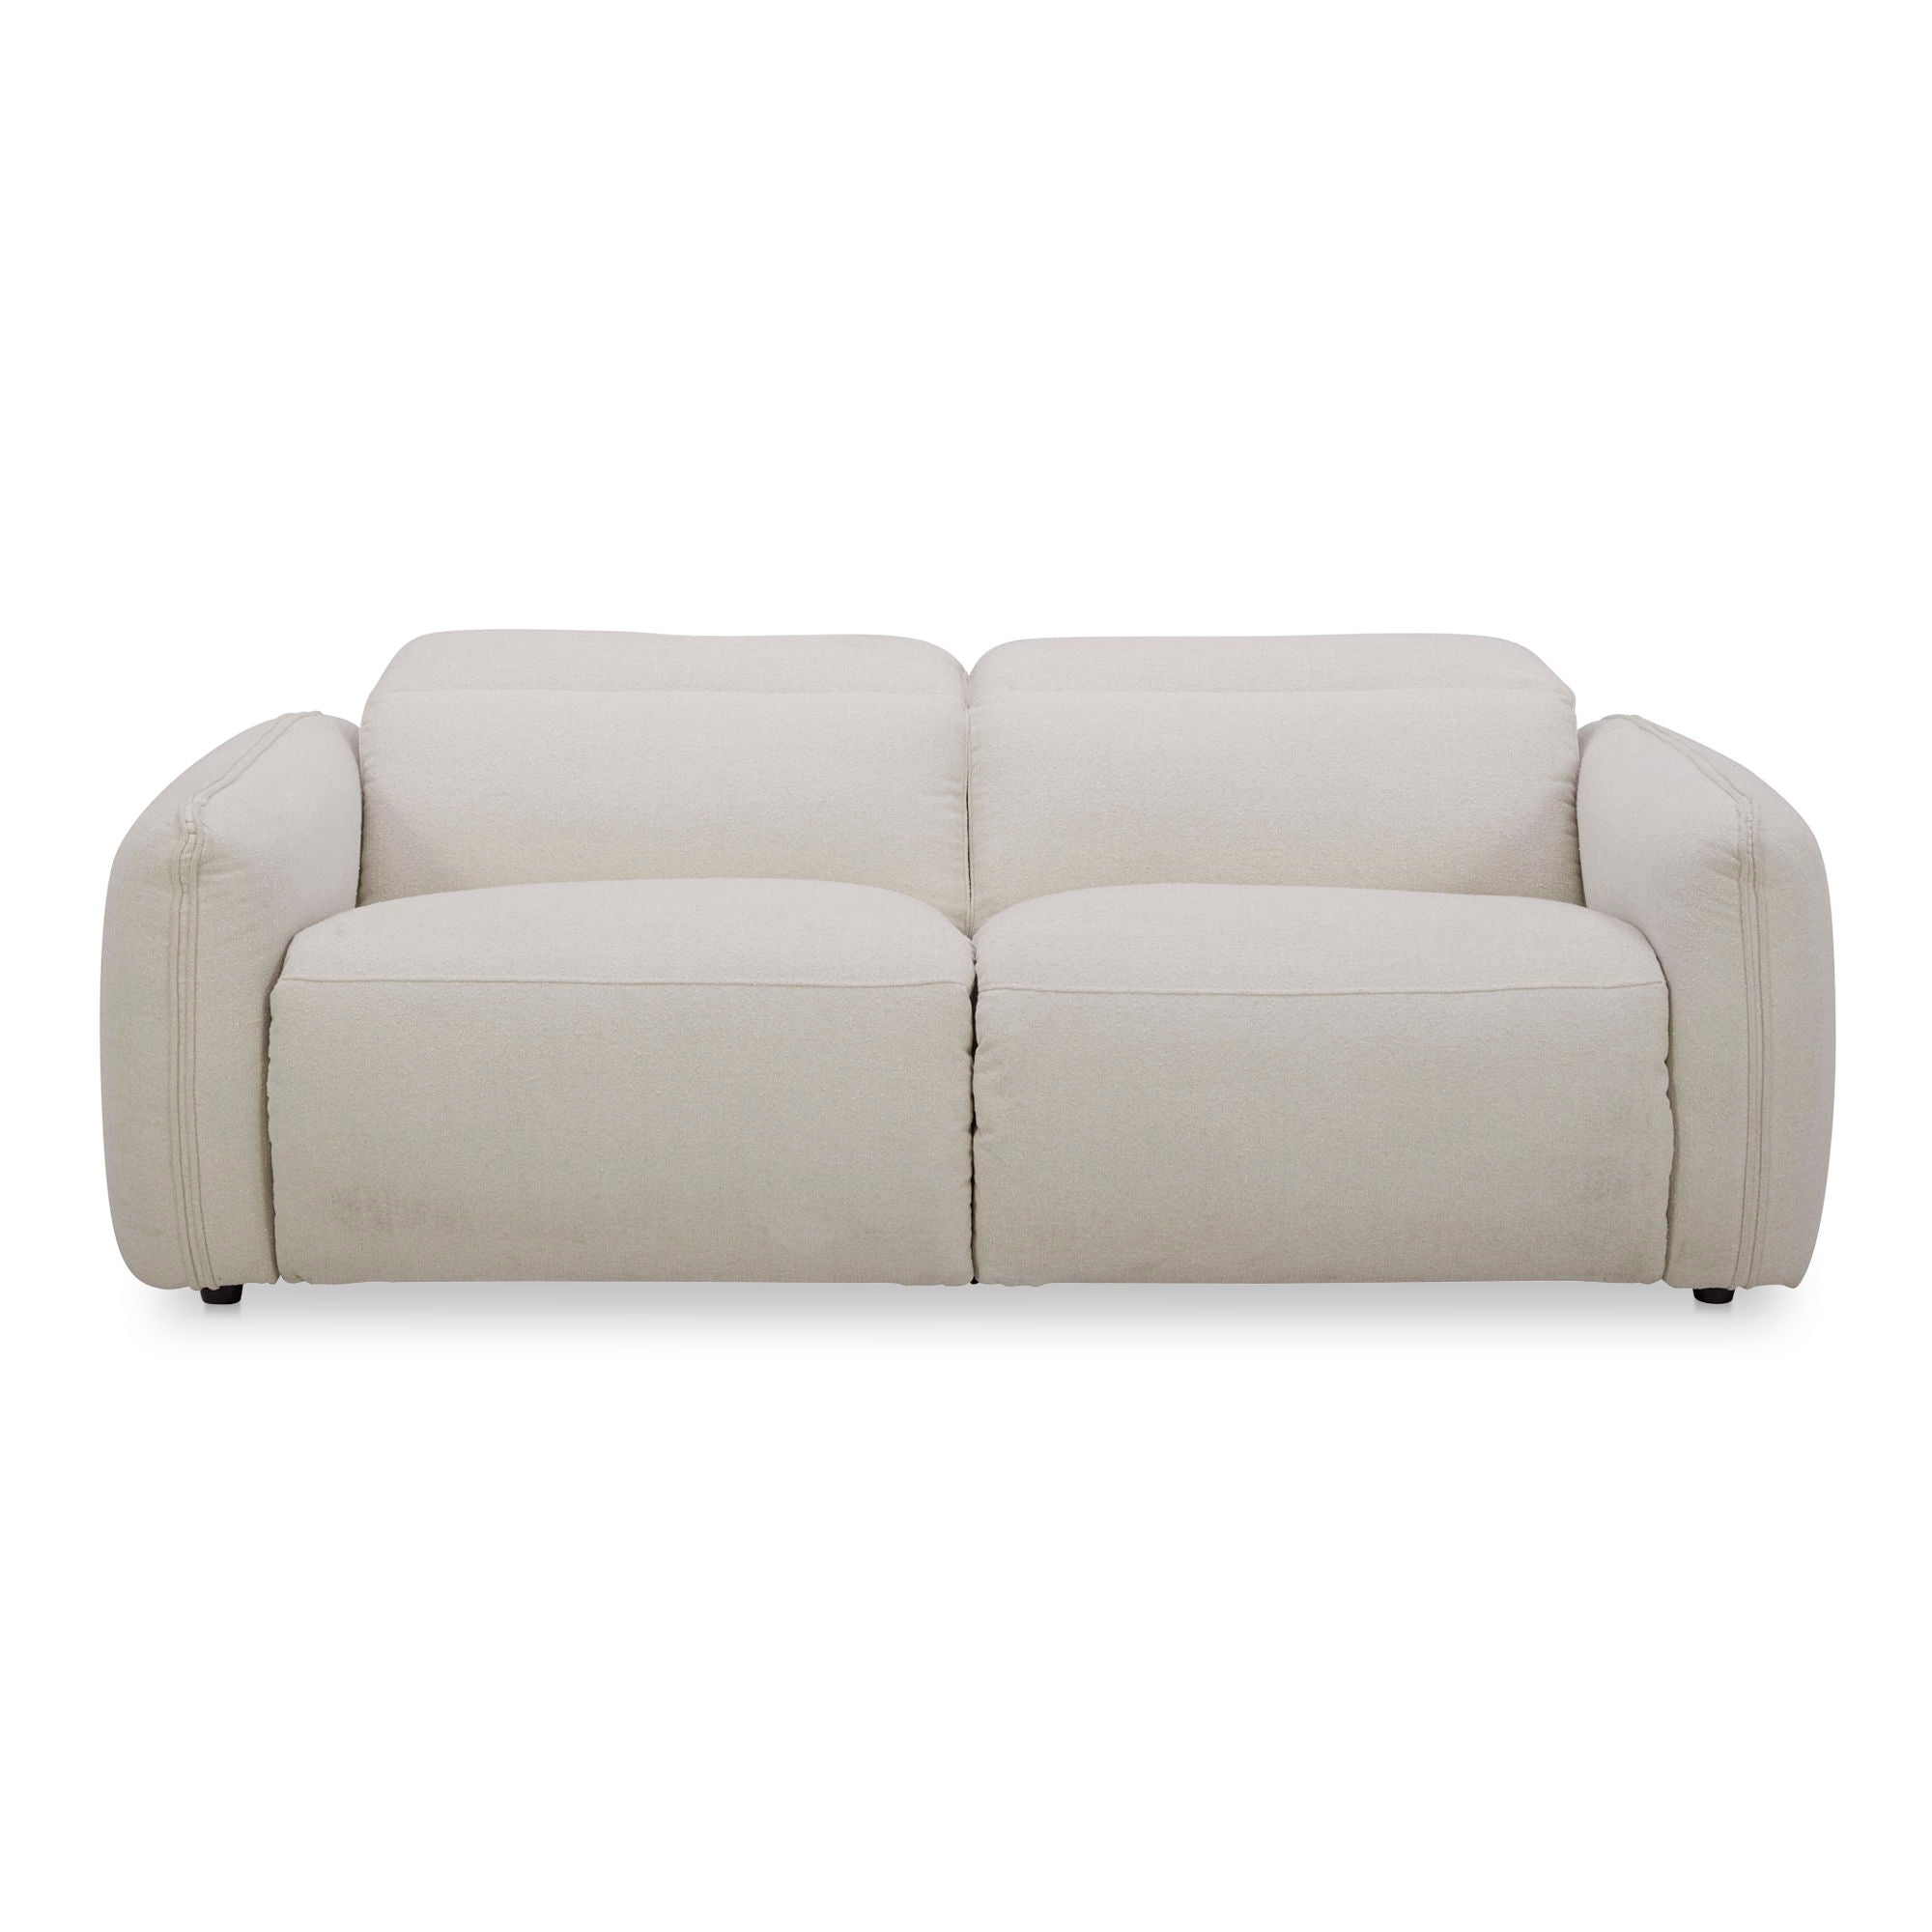 Eli - Power Recliner Sofa - White